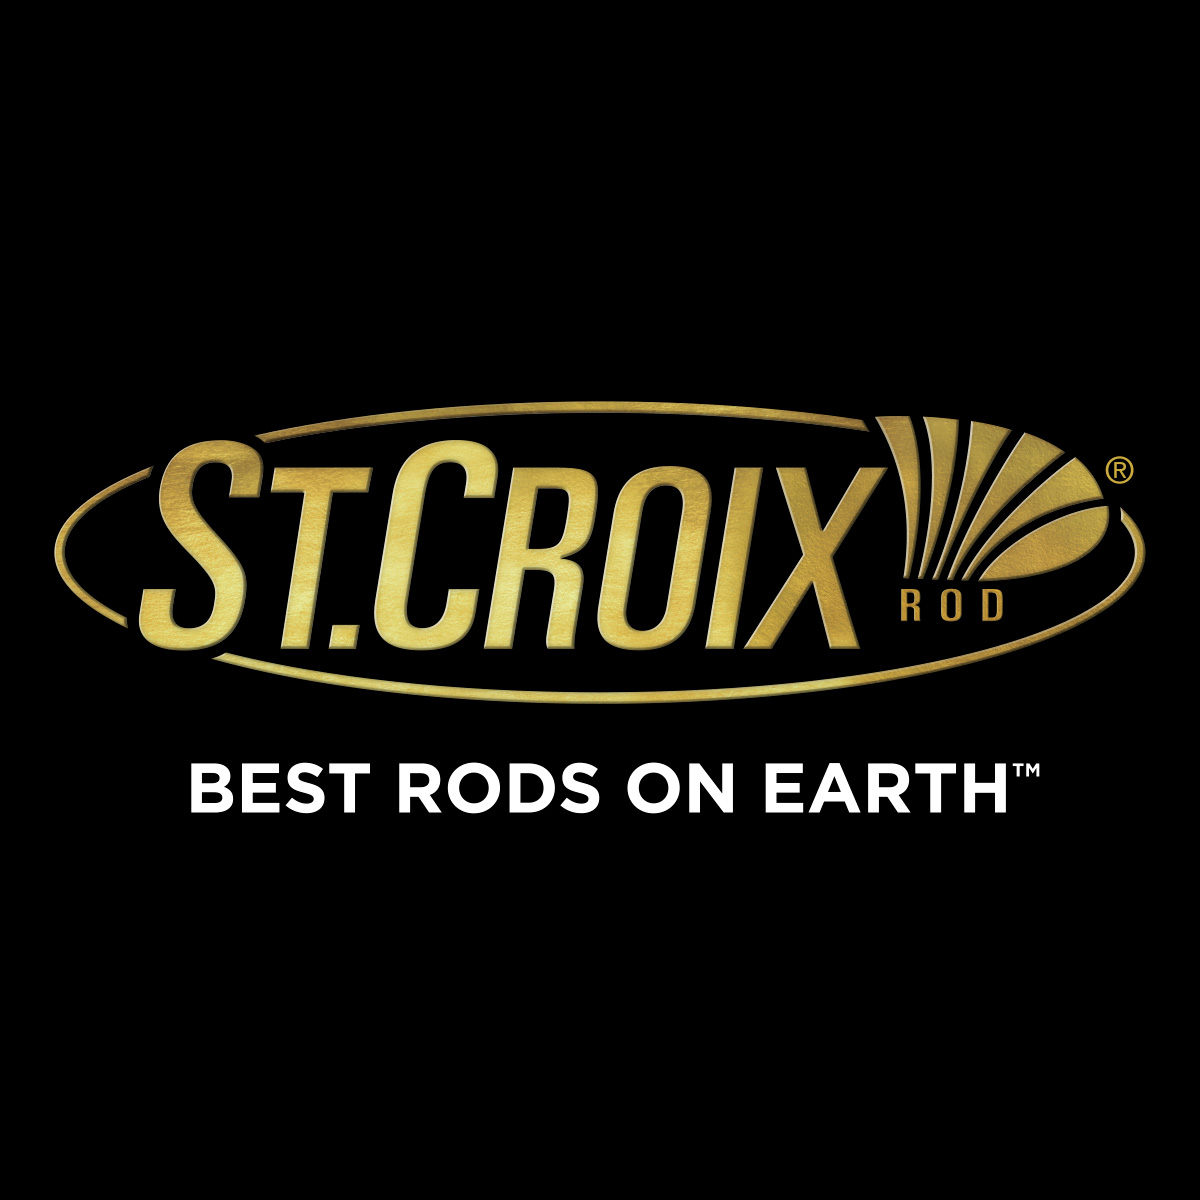 ST CROIX Logo